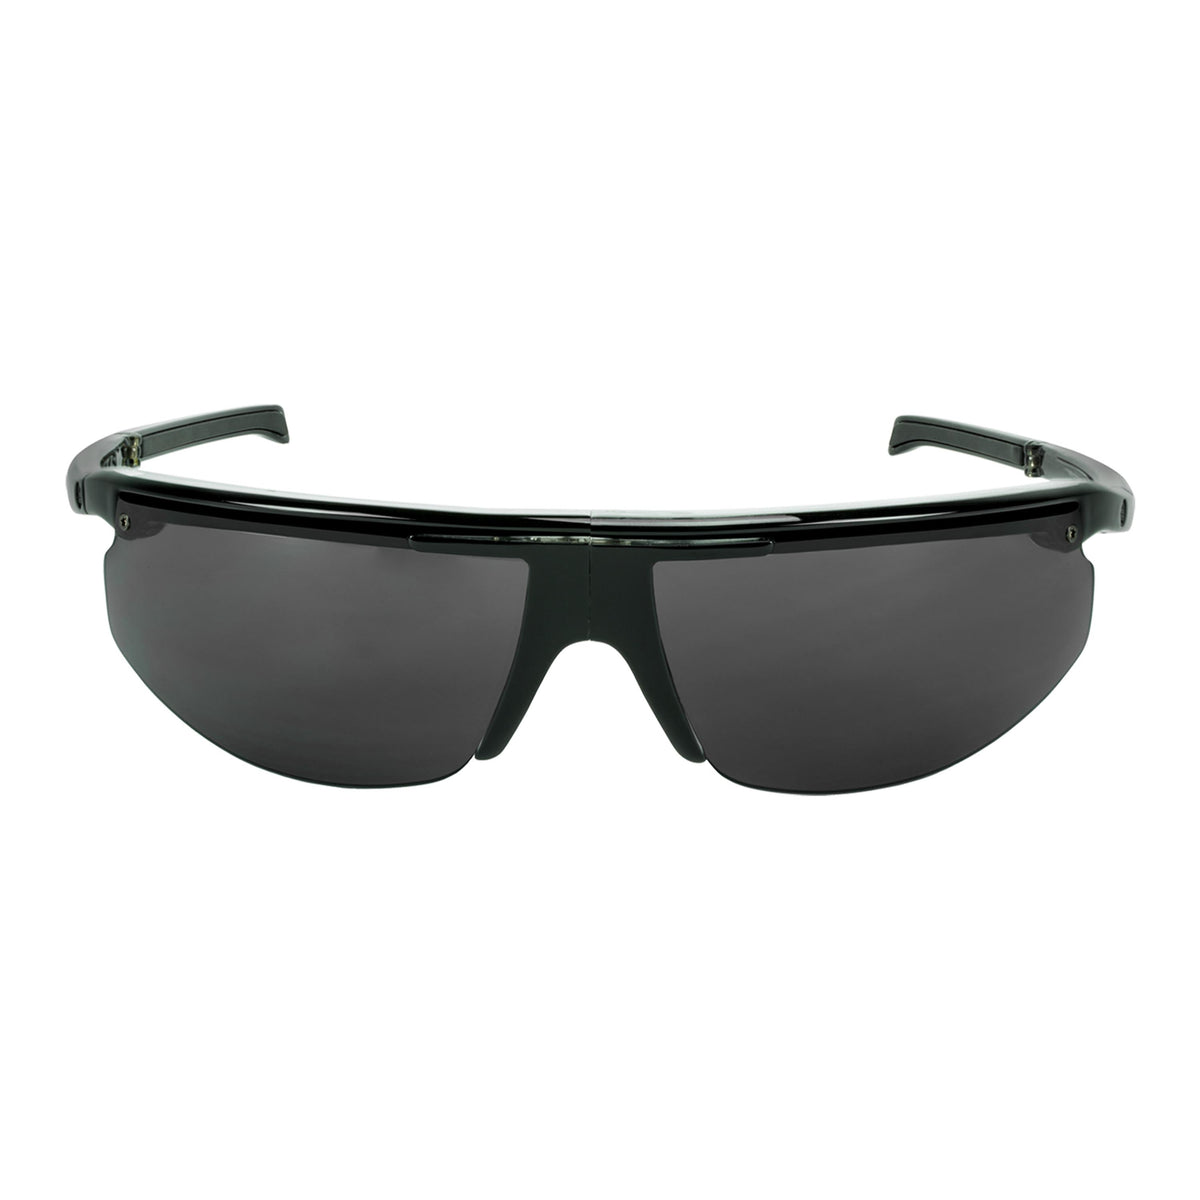 Popticals, Premium Compact Sunglasses, PopStar, 040040-BLGP, Polarized Sunglasses, Gloss Black Crystal Frame, Gray Lenses, Small, Front View